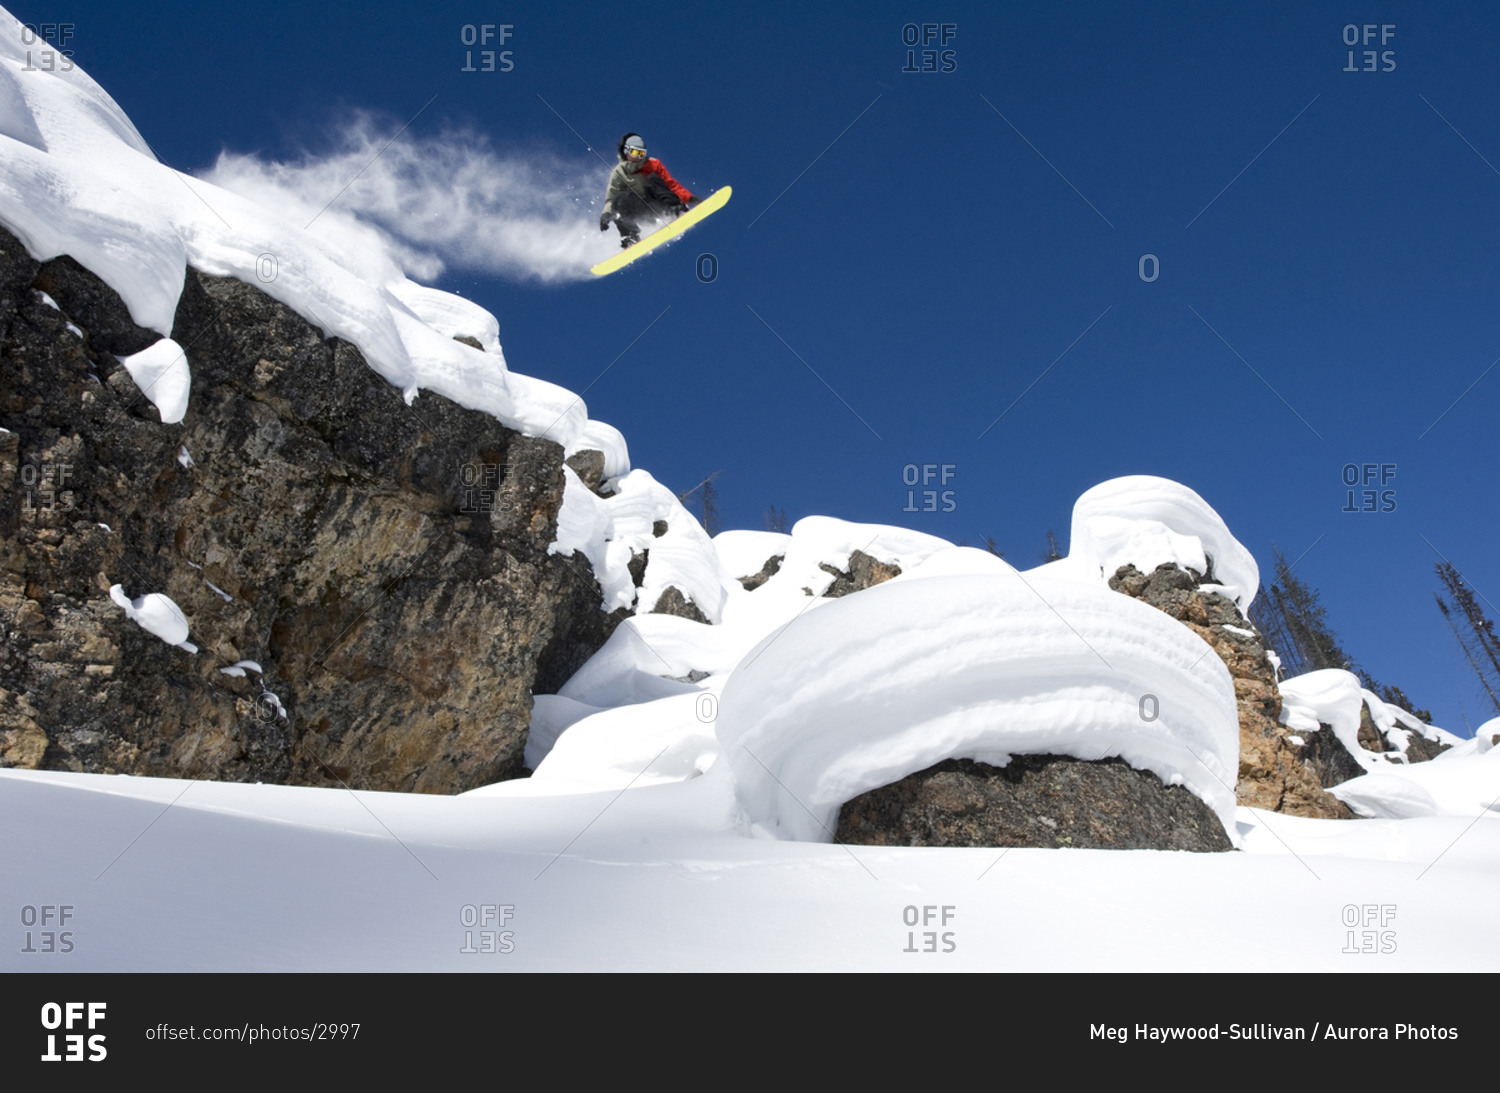 Big Sky backcountry snowboarding